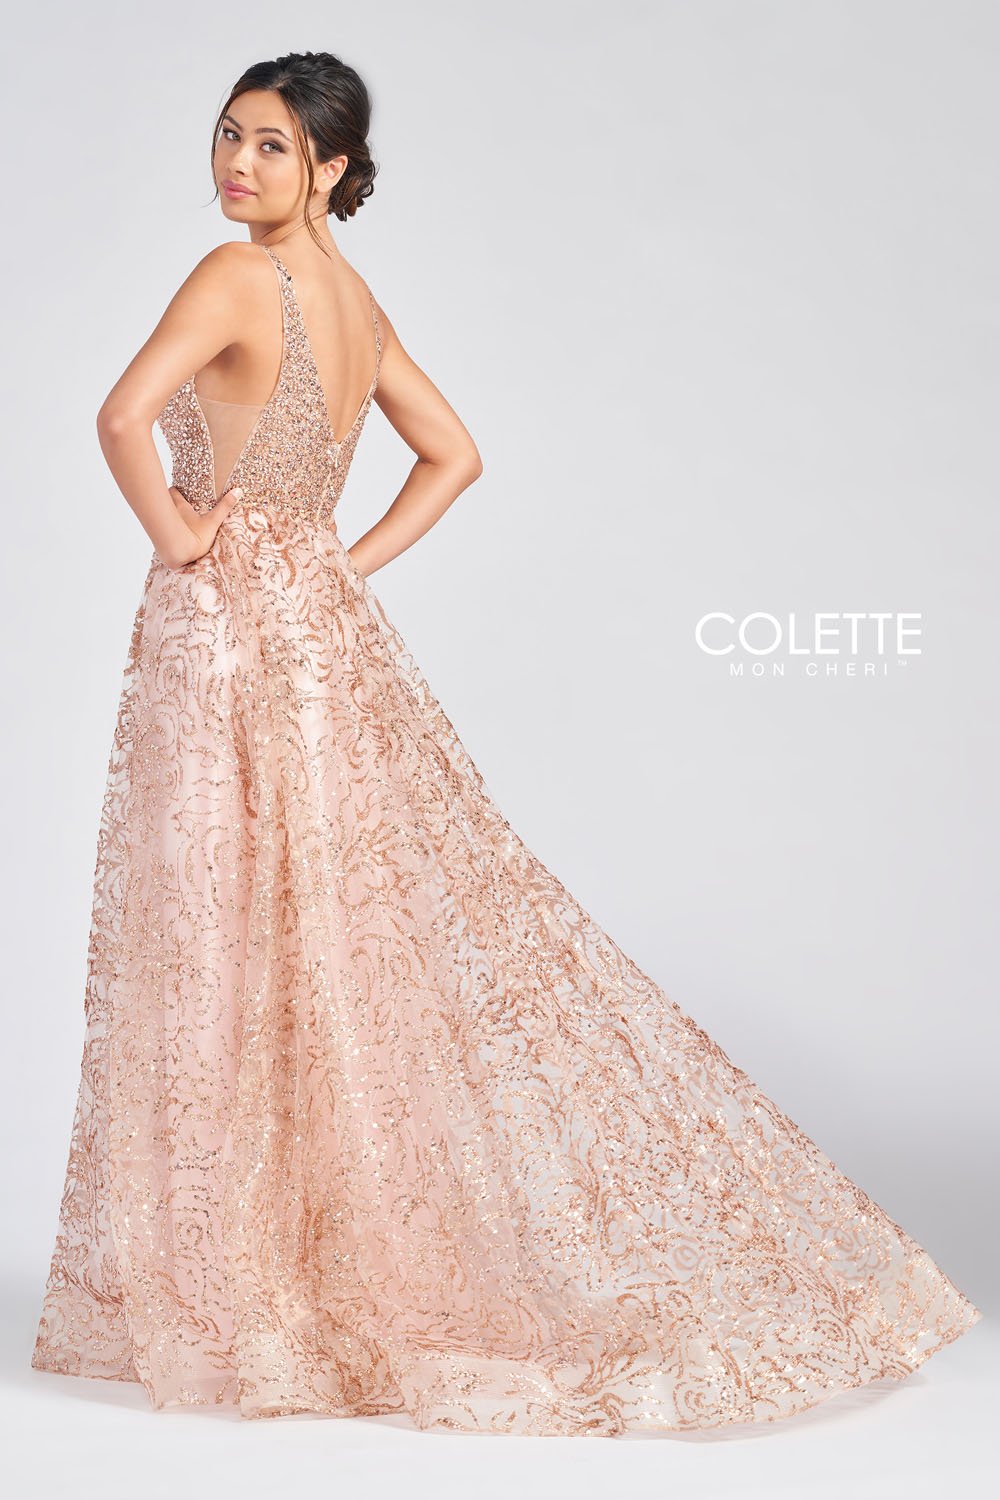 Colette CL12257 Blush Rose Gold prom dresses.  Blush Rose Gold prom dresses image by Colette.